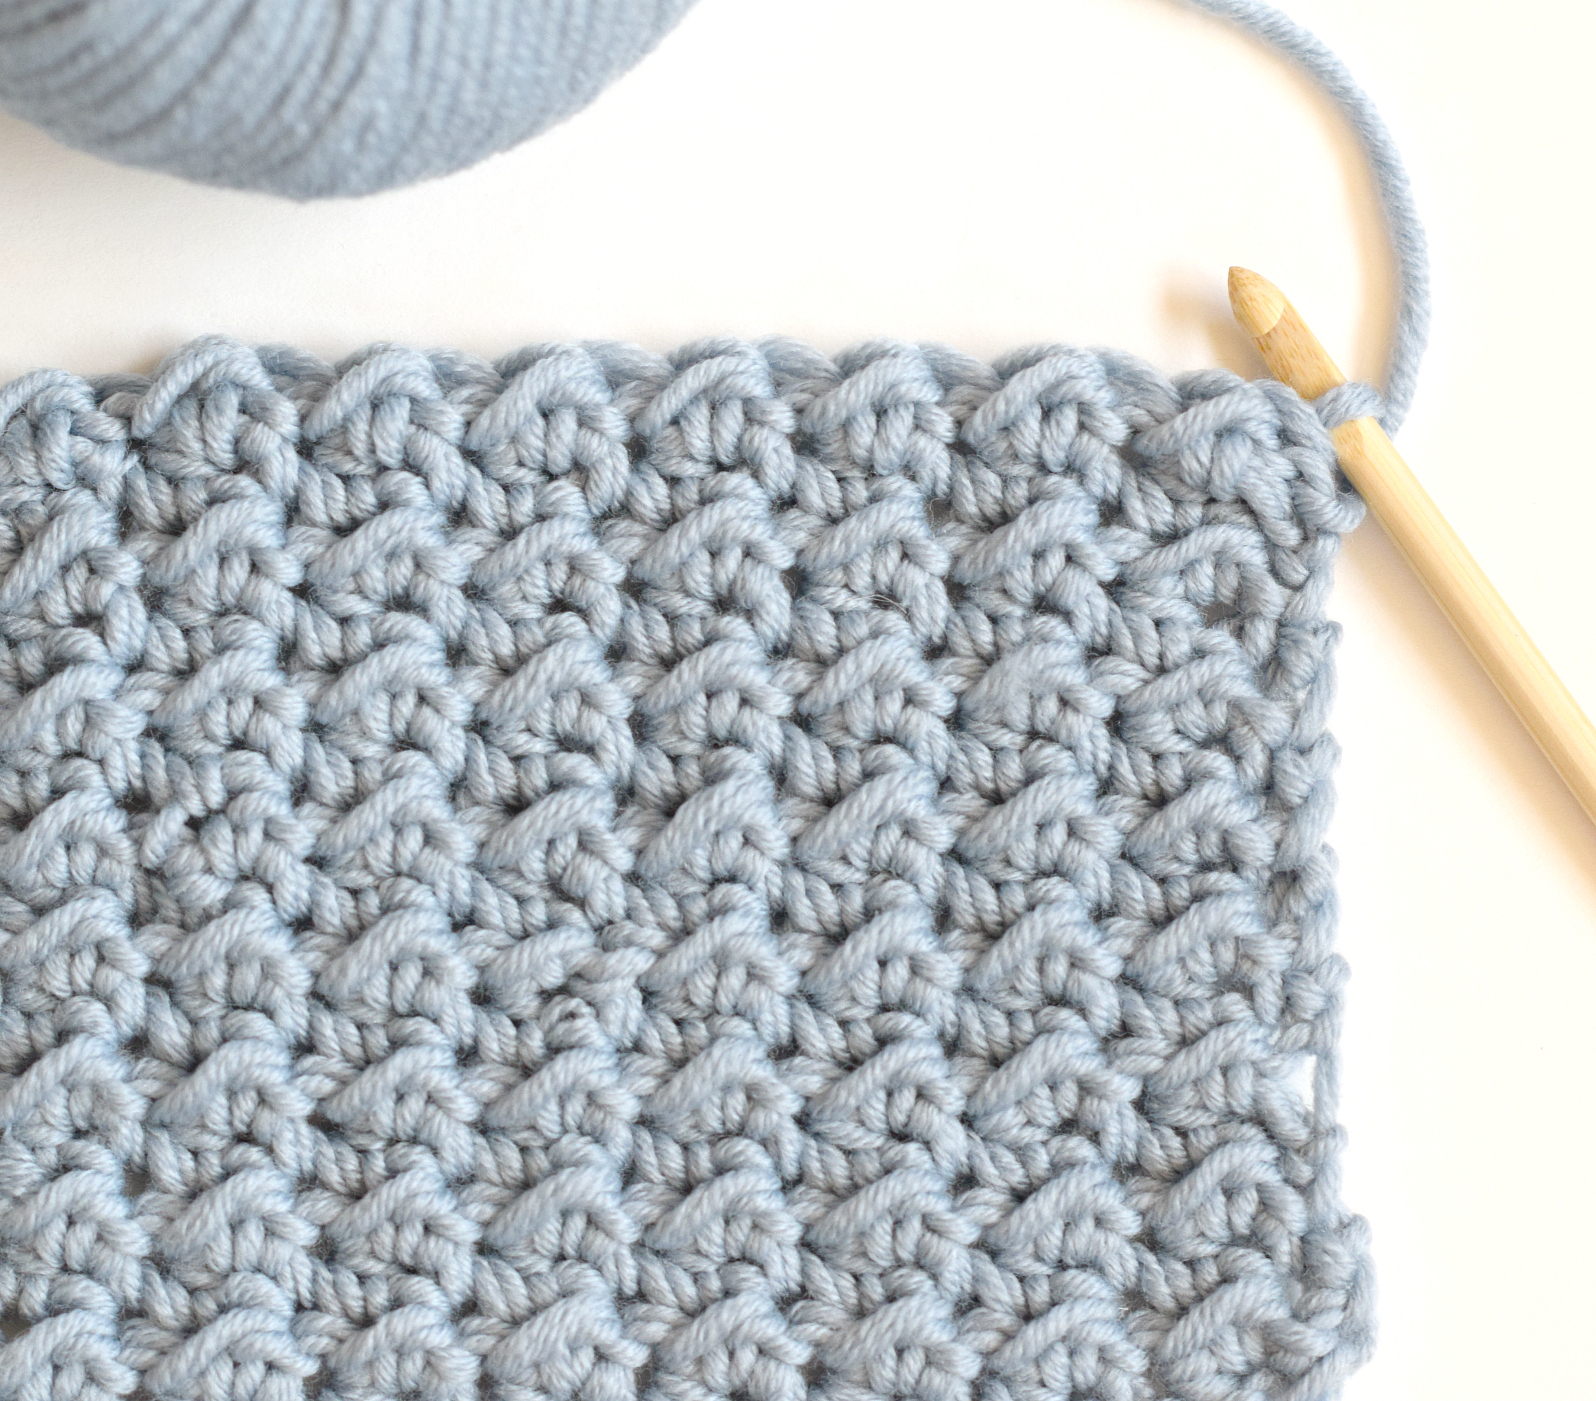 Moss Stitch Scarf Knitting Pattern How To Crochet The Even Moss Stitch Mama In A Stitch